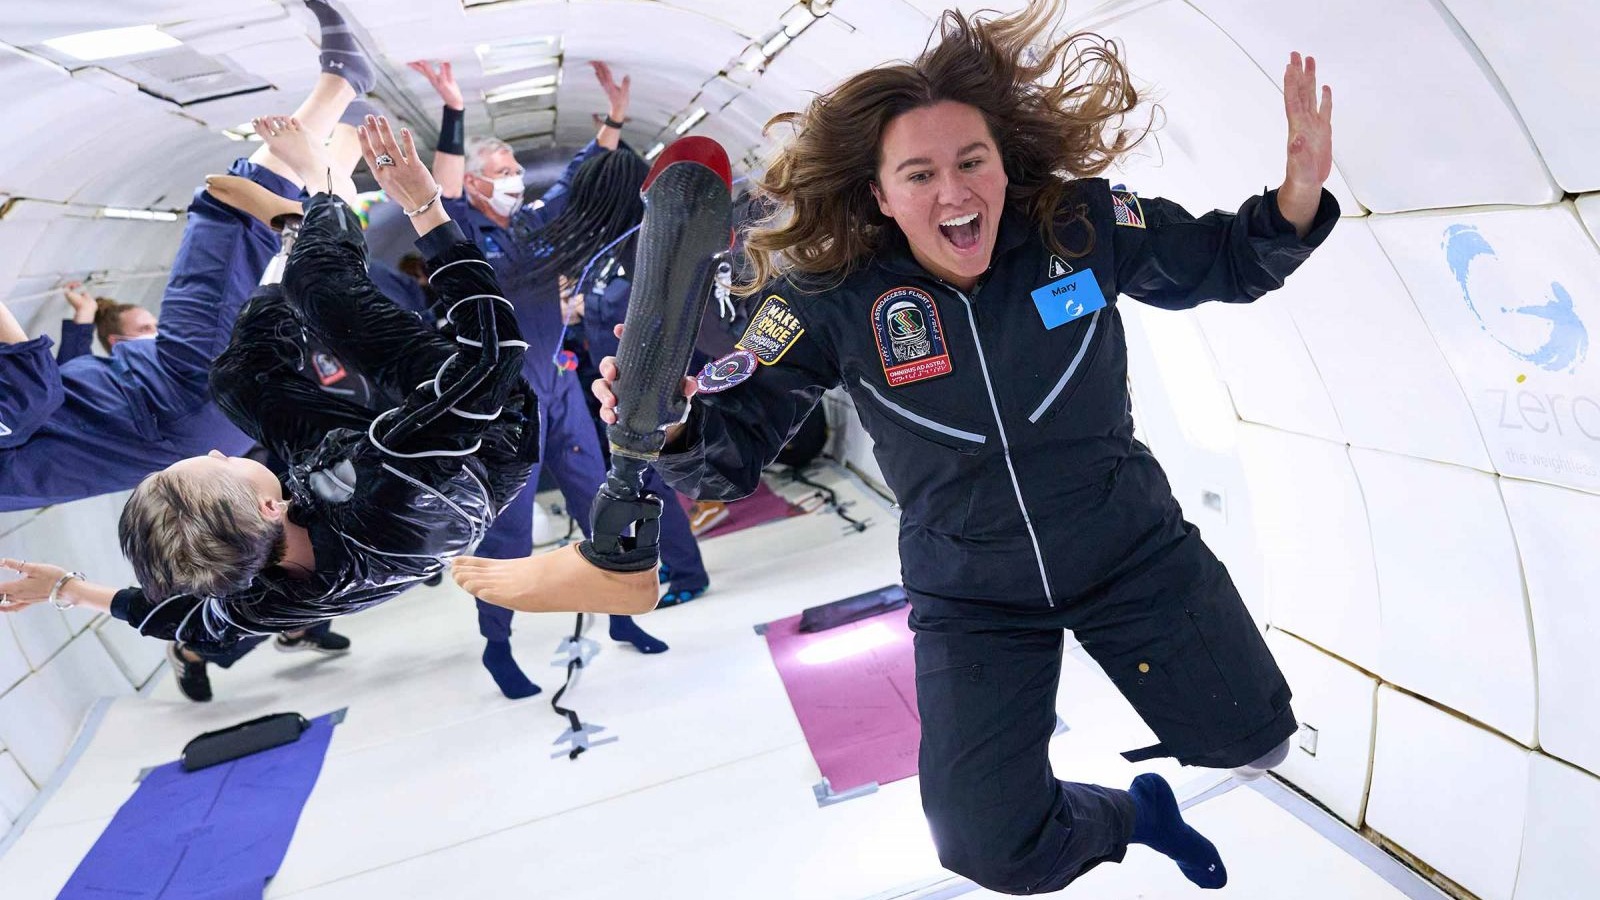 Zero-gravity parabolic flights get surge of demand for spaceflight work